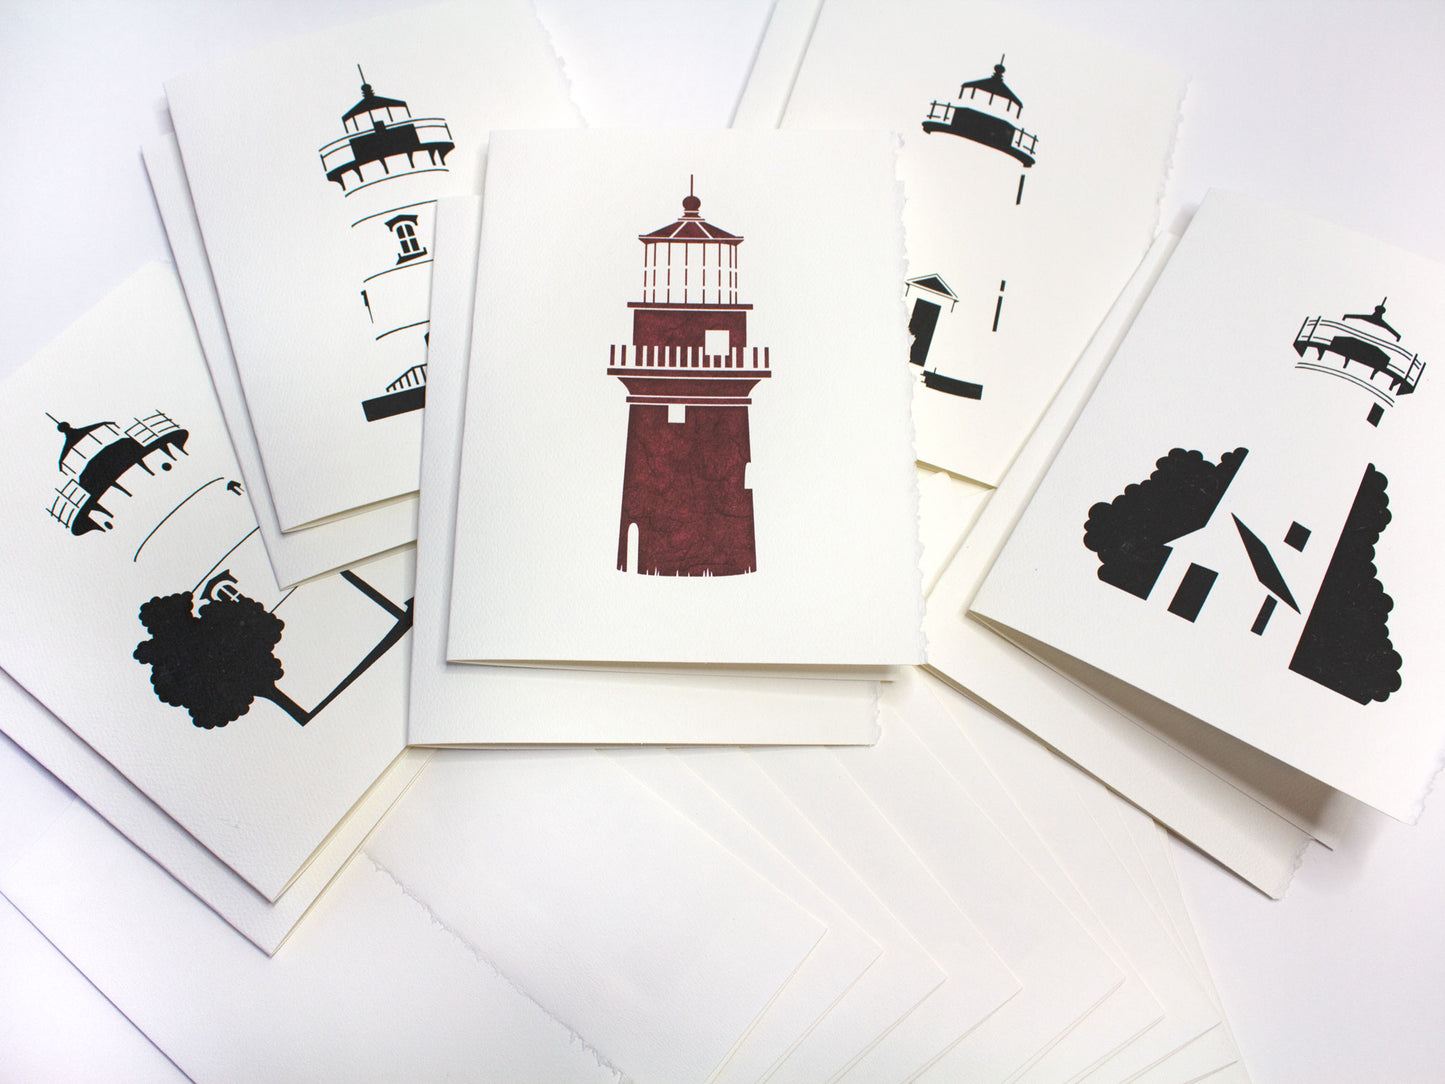 Lighthouse Card Set: All 5 Martha's Vineyard Lighthouses